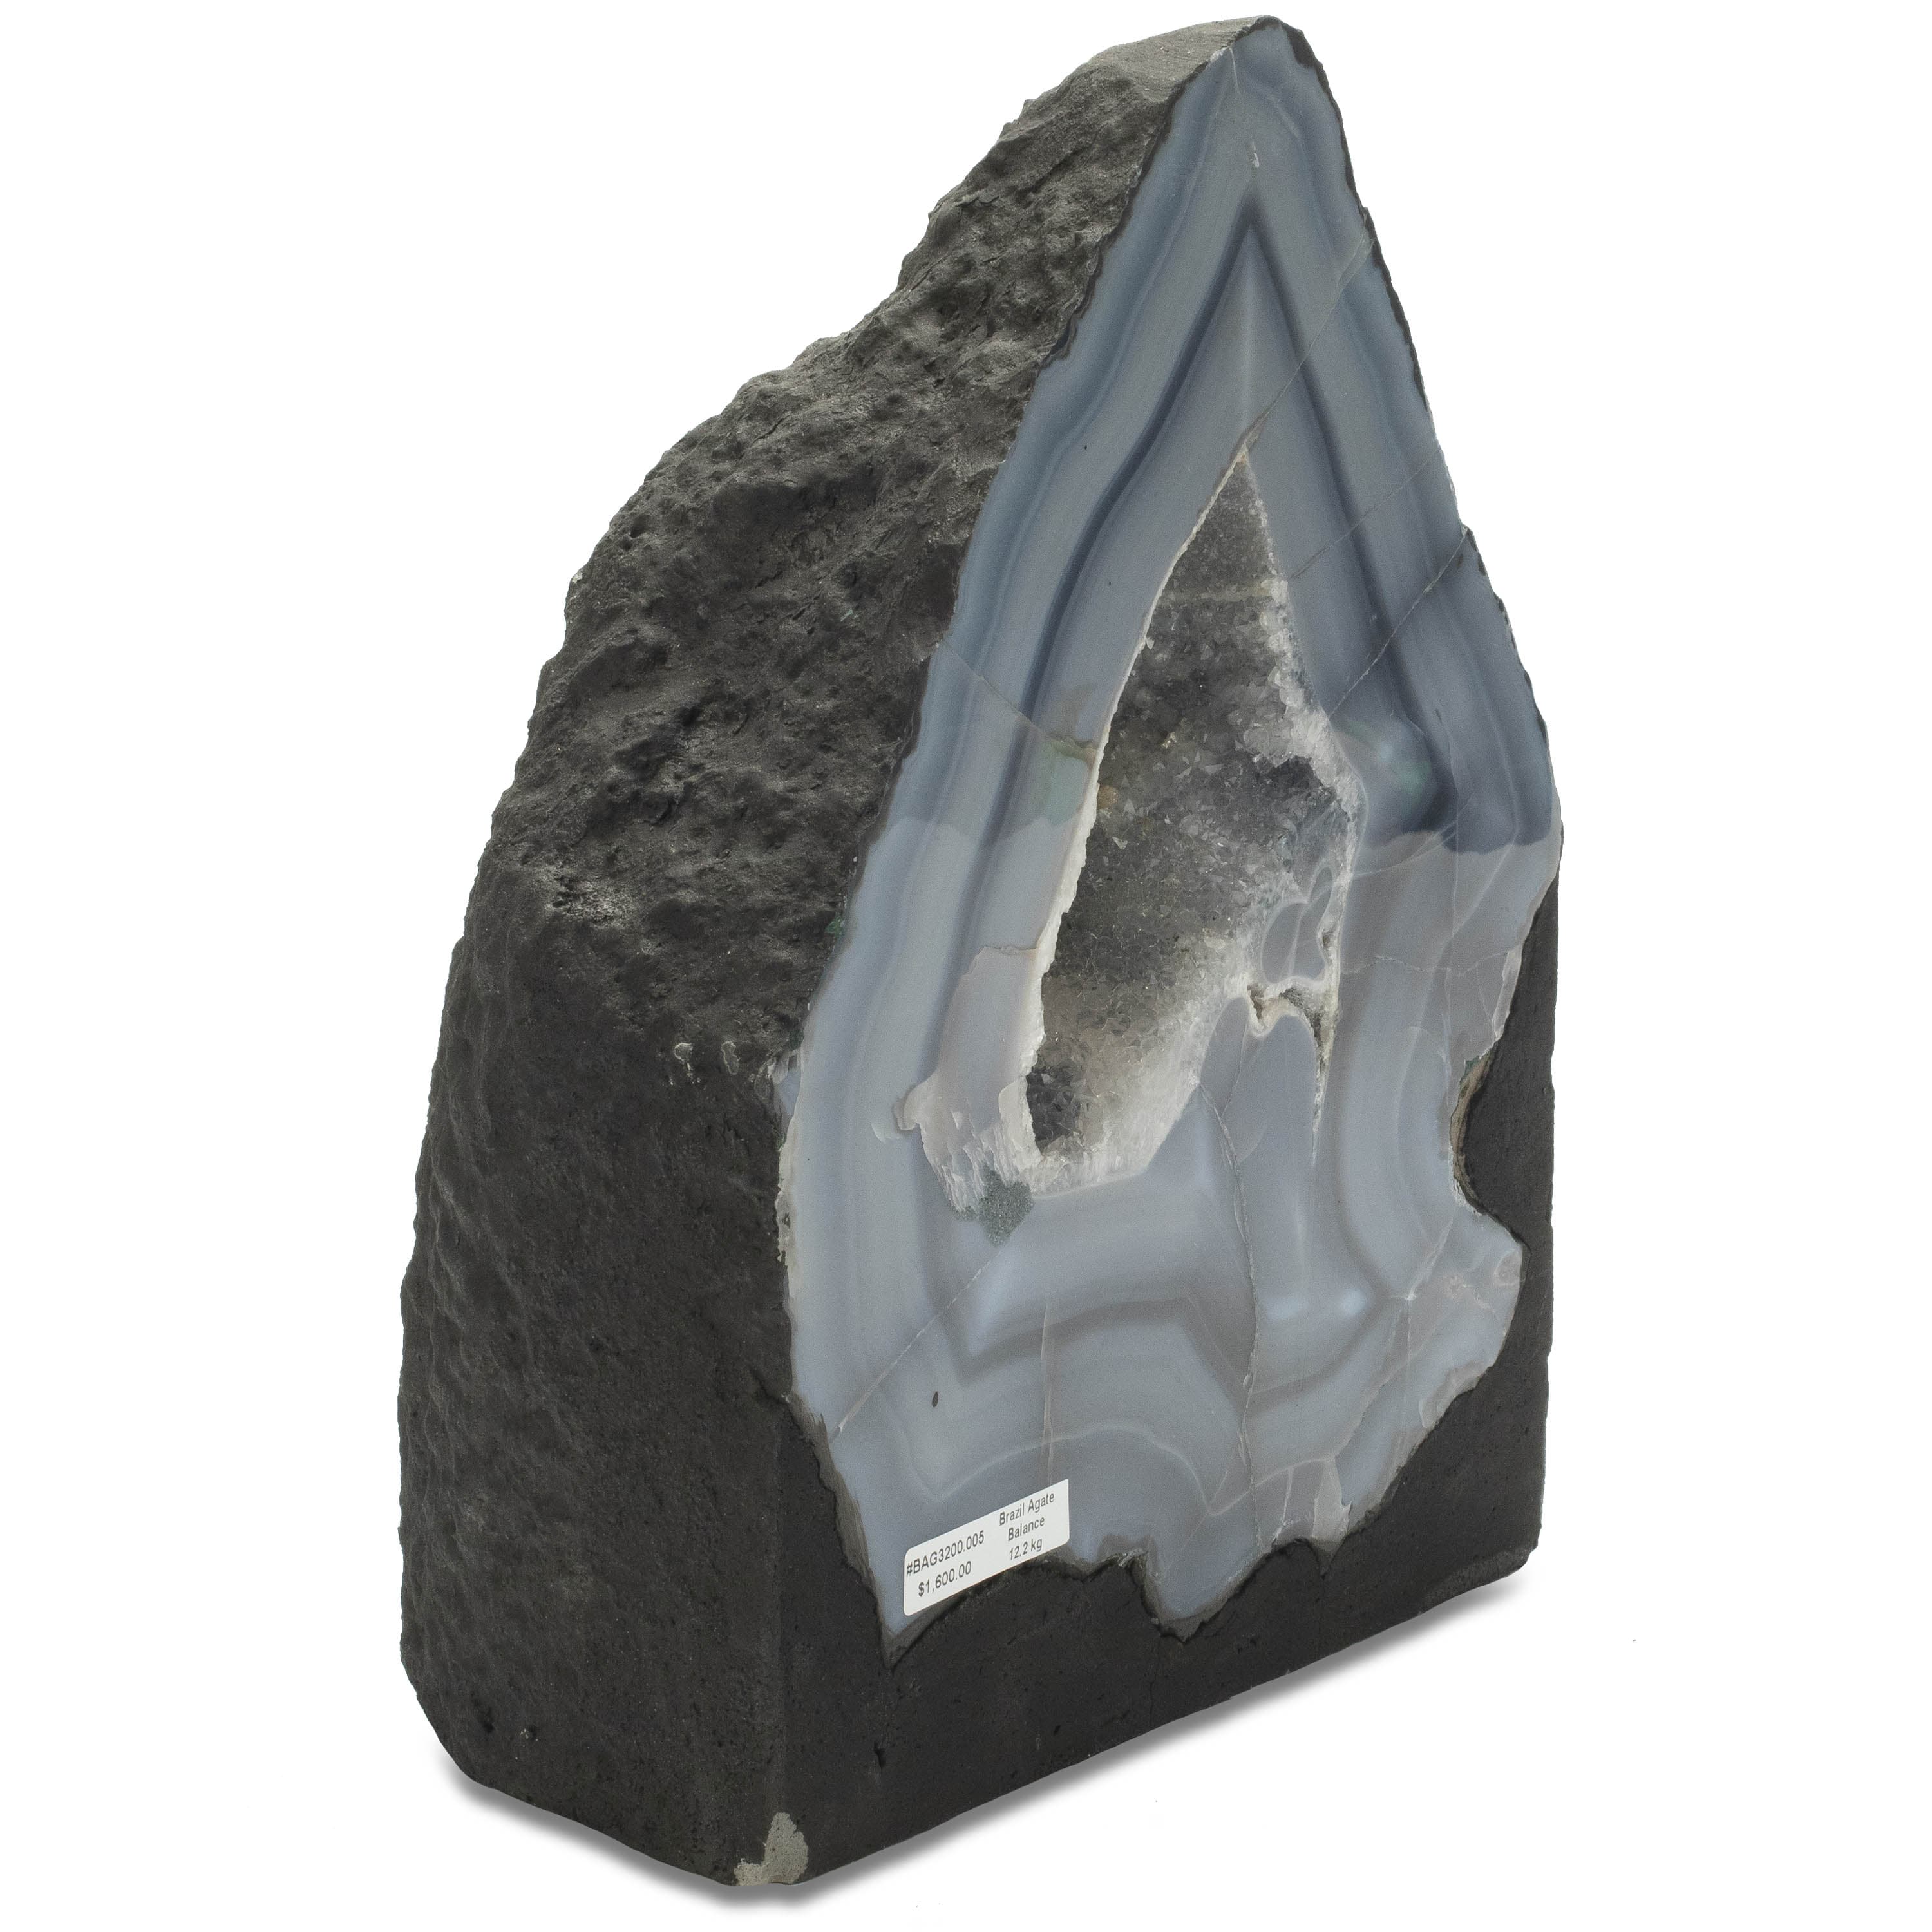 Kalifano Agate Agate Geode - 11.5 in. / 27 lbs BAG3200.005